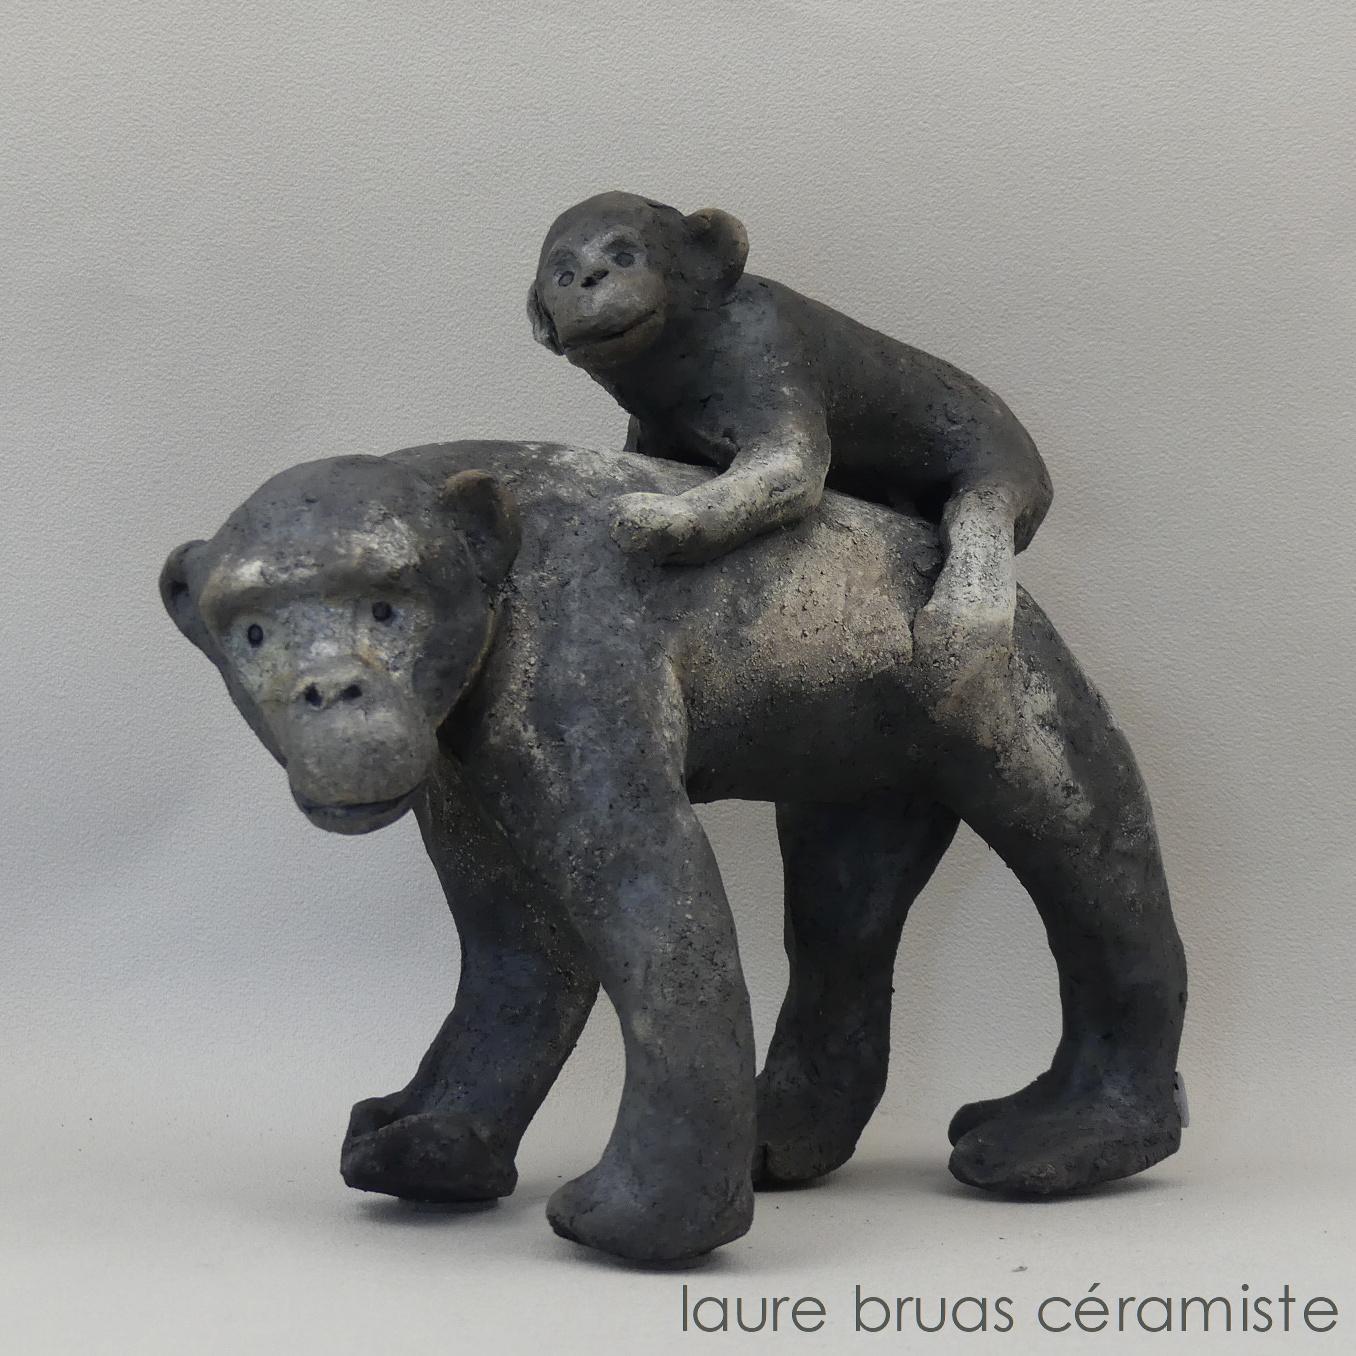 Sculptures animalières - Sculptures martins-pêcheurs -Art Verrier